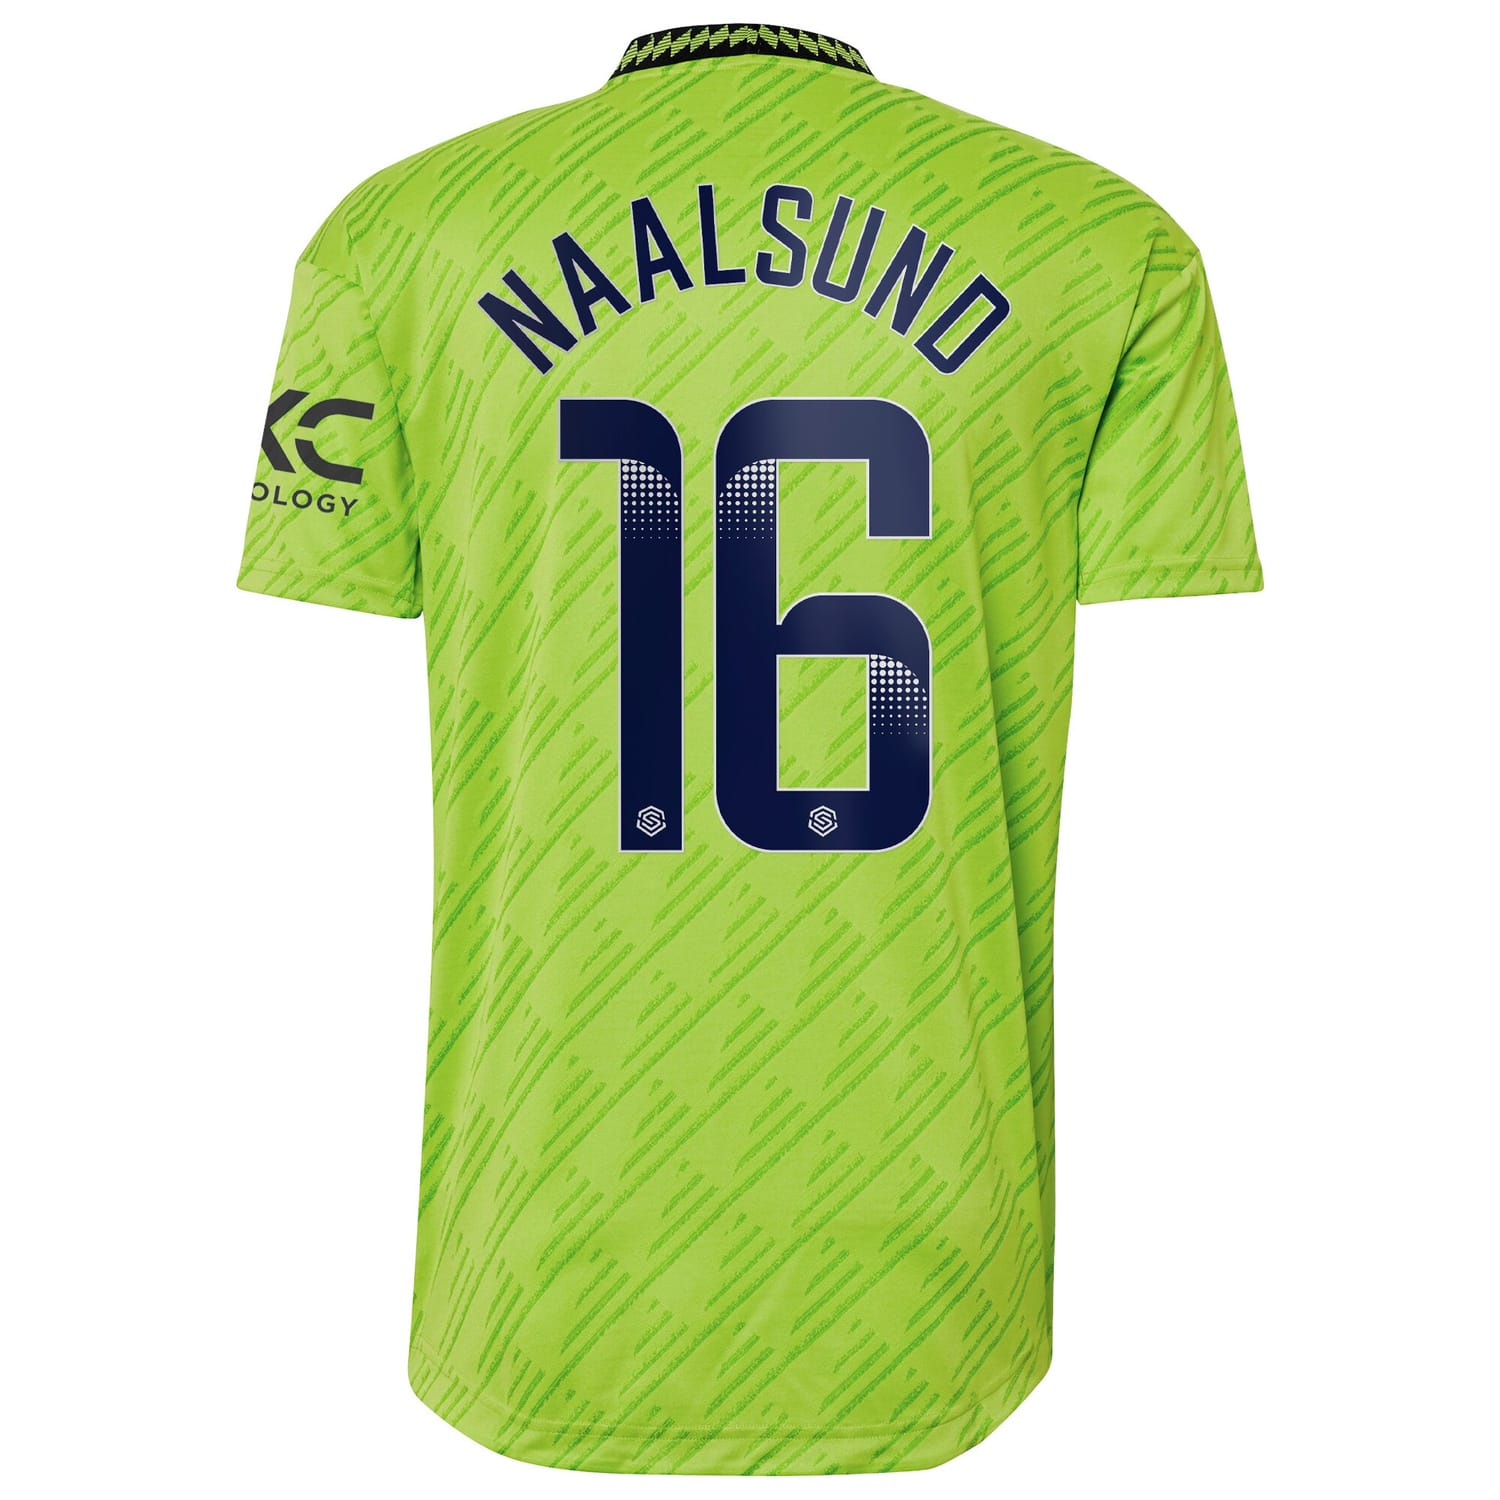 Premier League Manchester United Third WSL Jersey Shirt 2022-23 player Lisa Naalsund 16 printing for Men